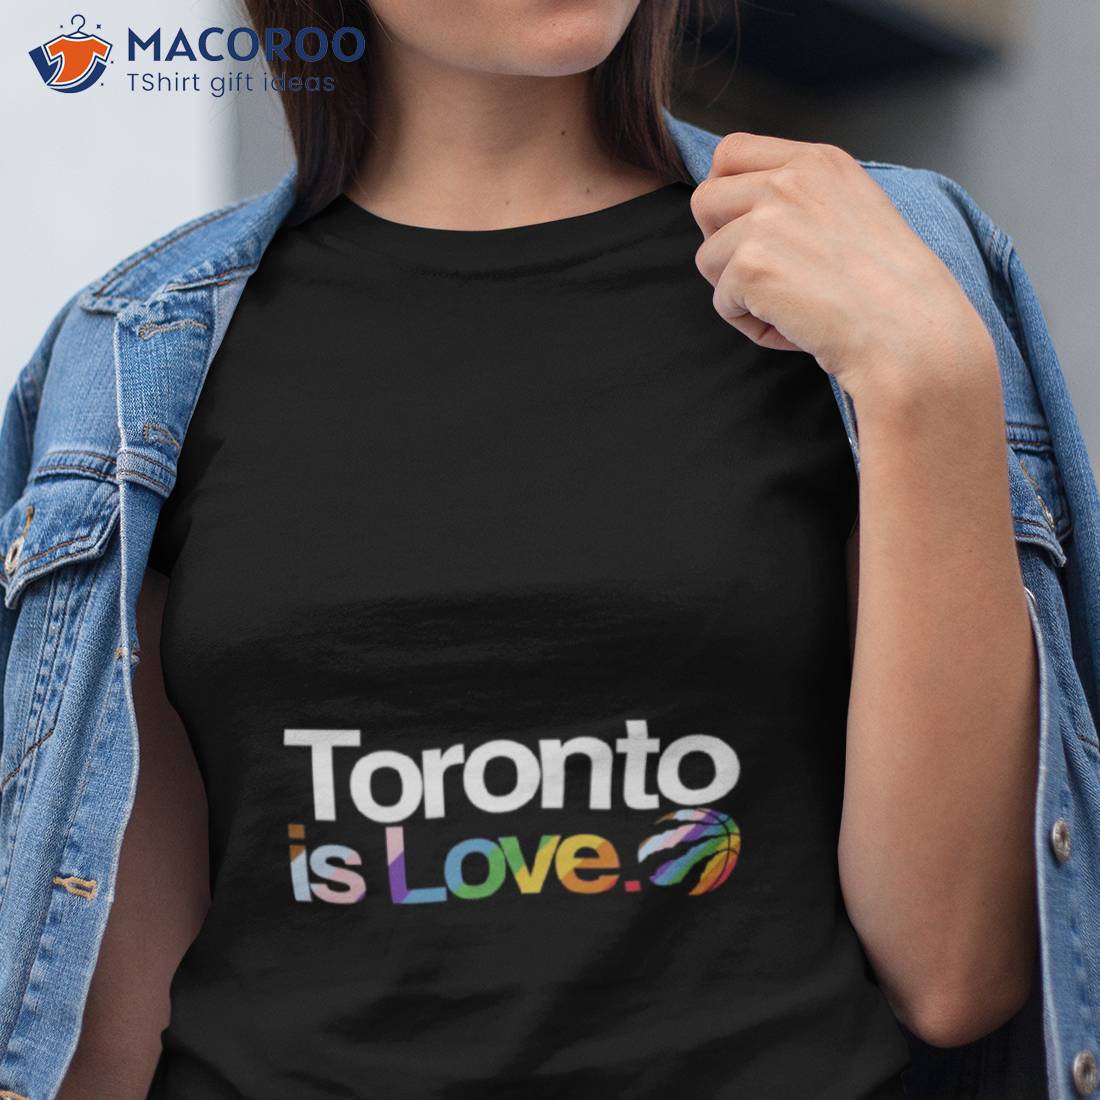 Toronto Raptors on X: Raptors Pride themed merchandise will be